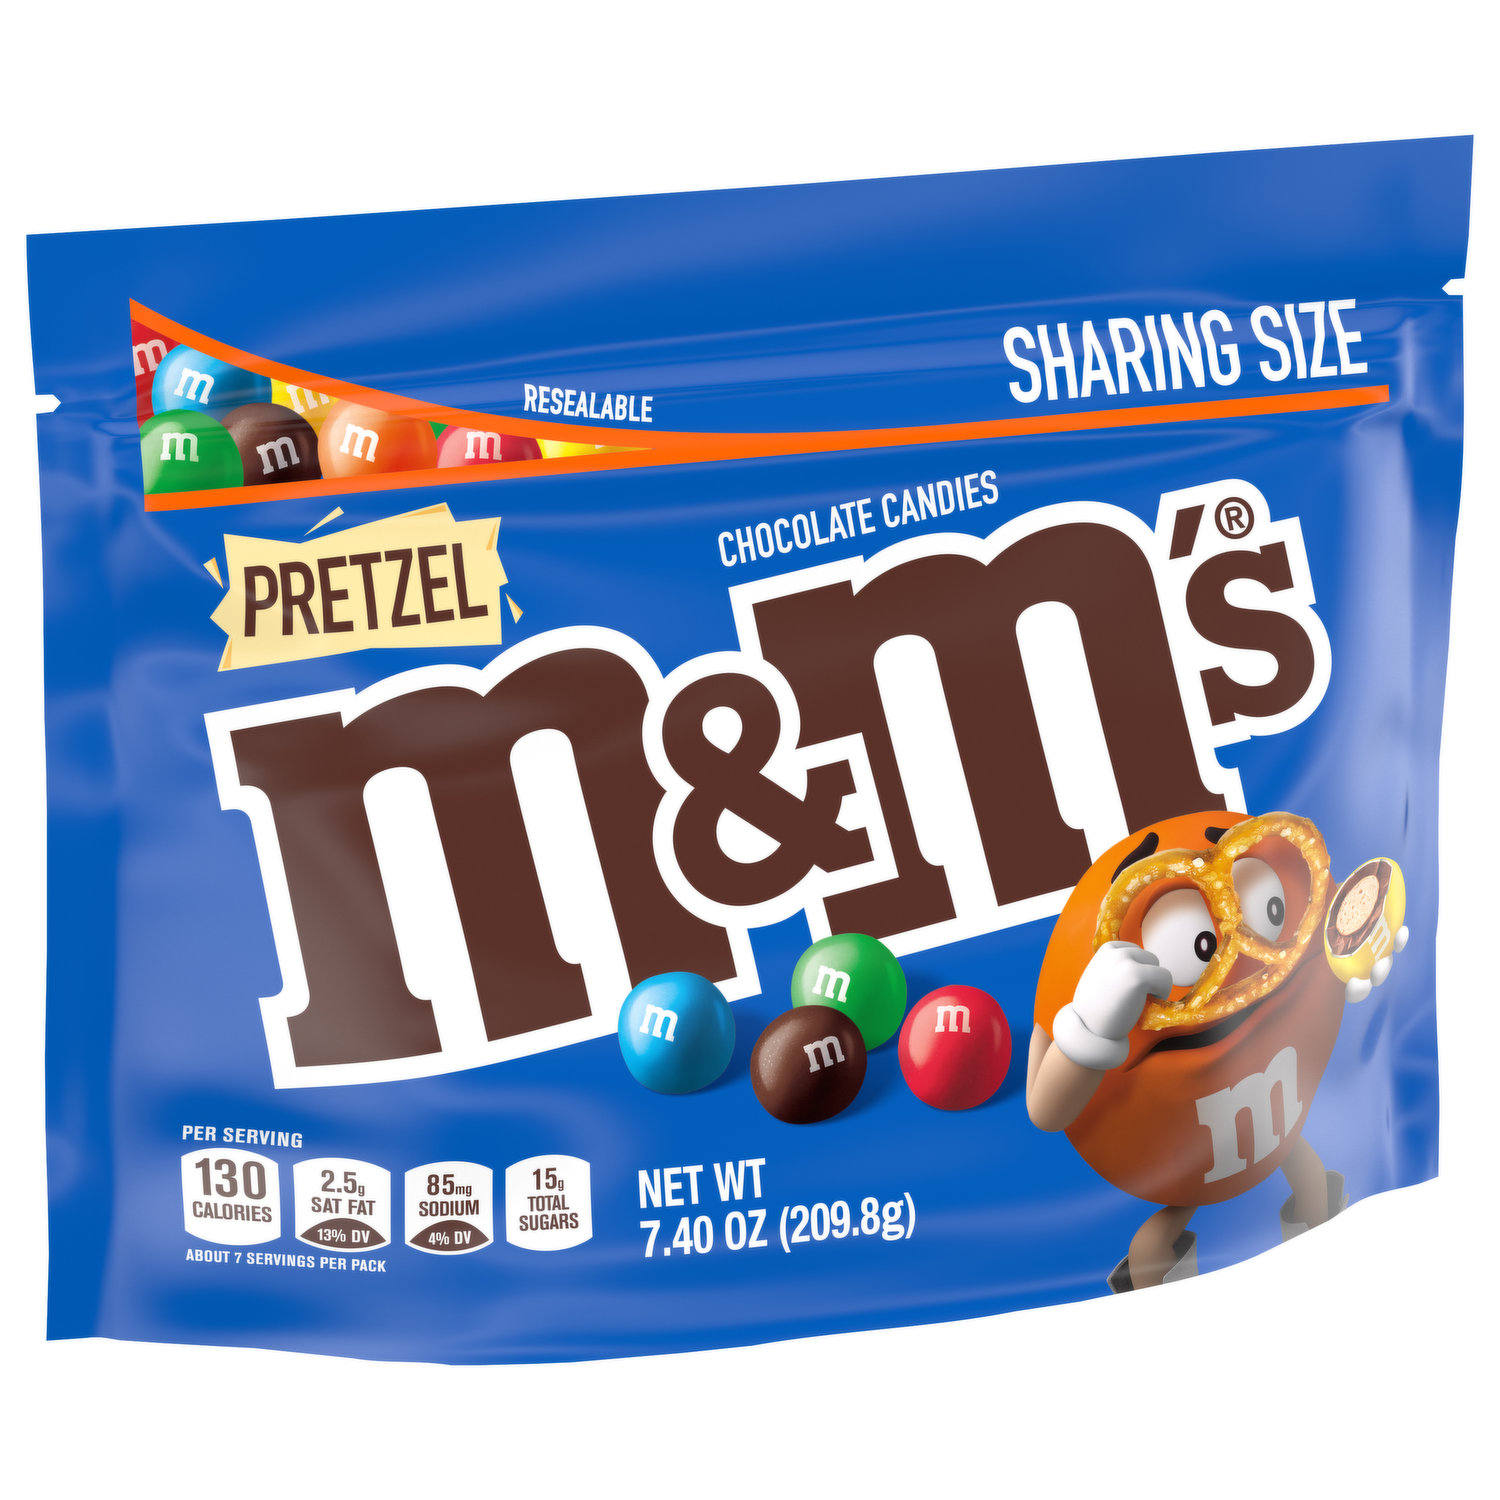 M&M's Chocolate Candies, Peanut, Family Size - 18.08 oz